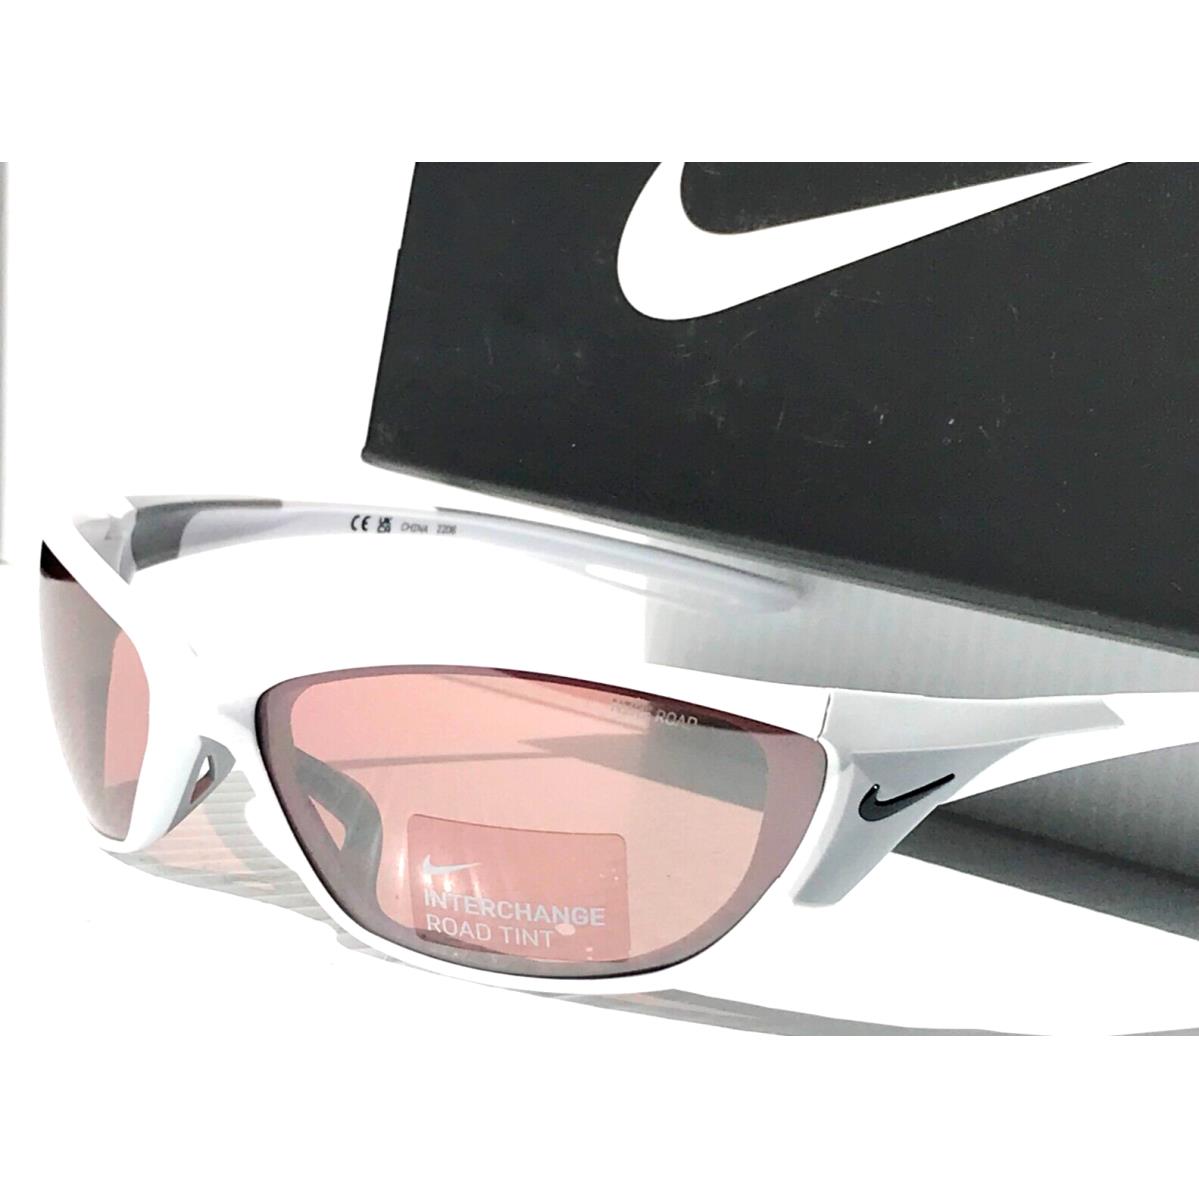 Nike Zone Matte White Interchangeable Max Optic Road Tint Sunglass DZ7357 100